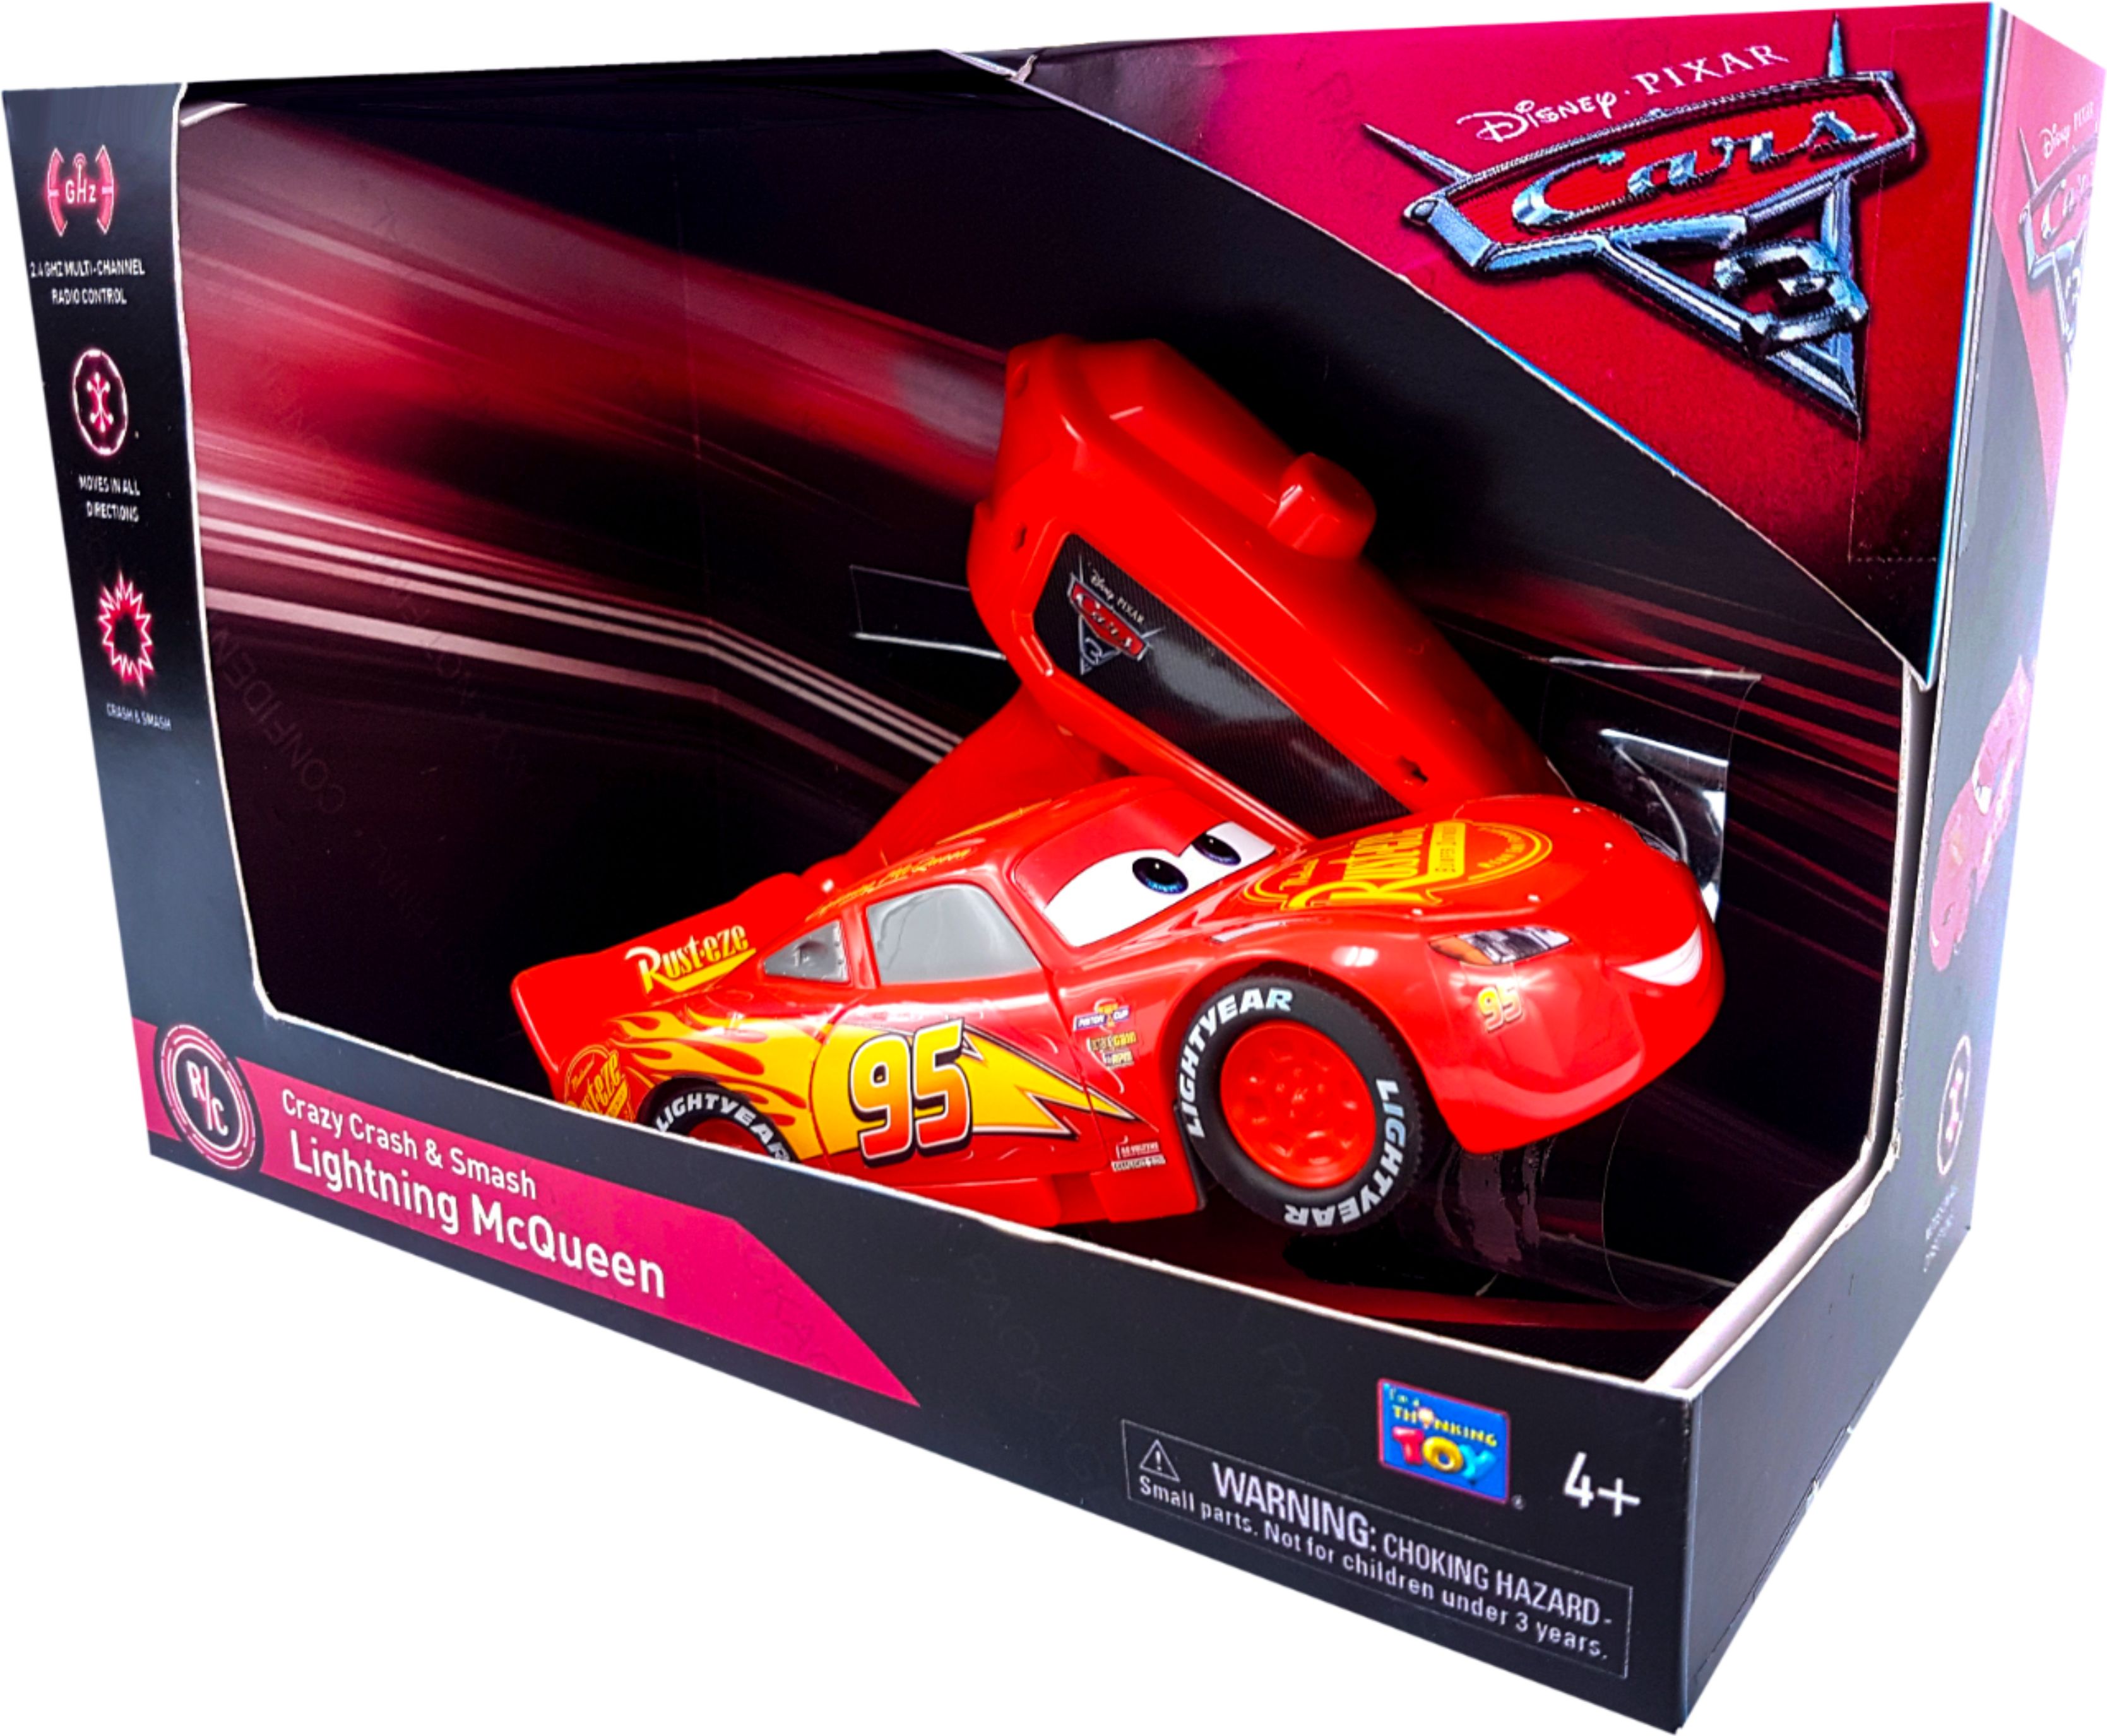 CARS Crazy Crash & Smash Lightning McQueen RC Car 00276 for sale online